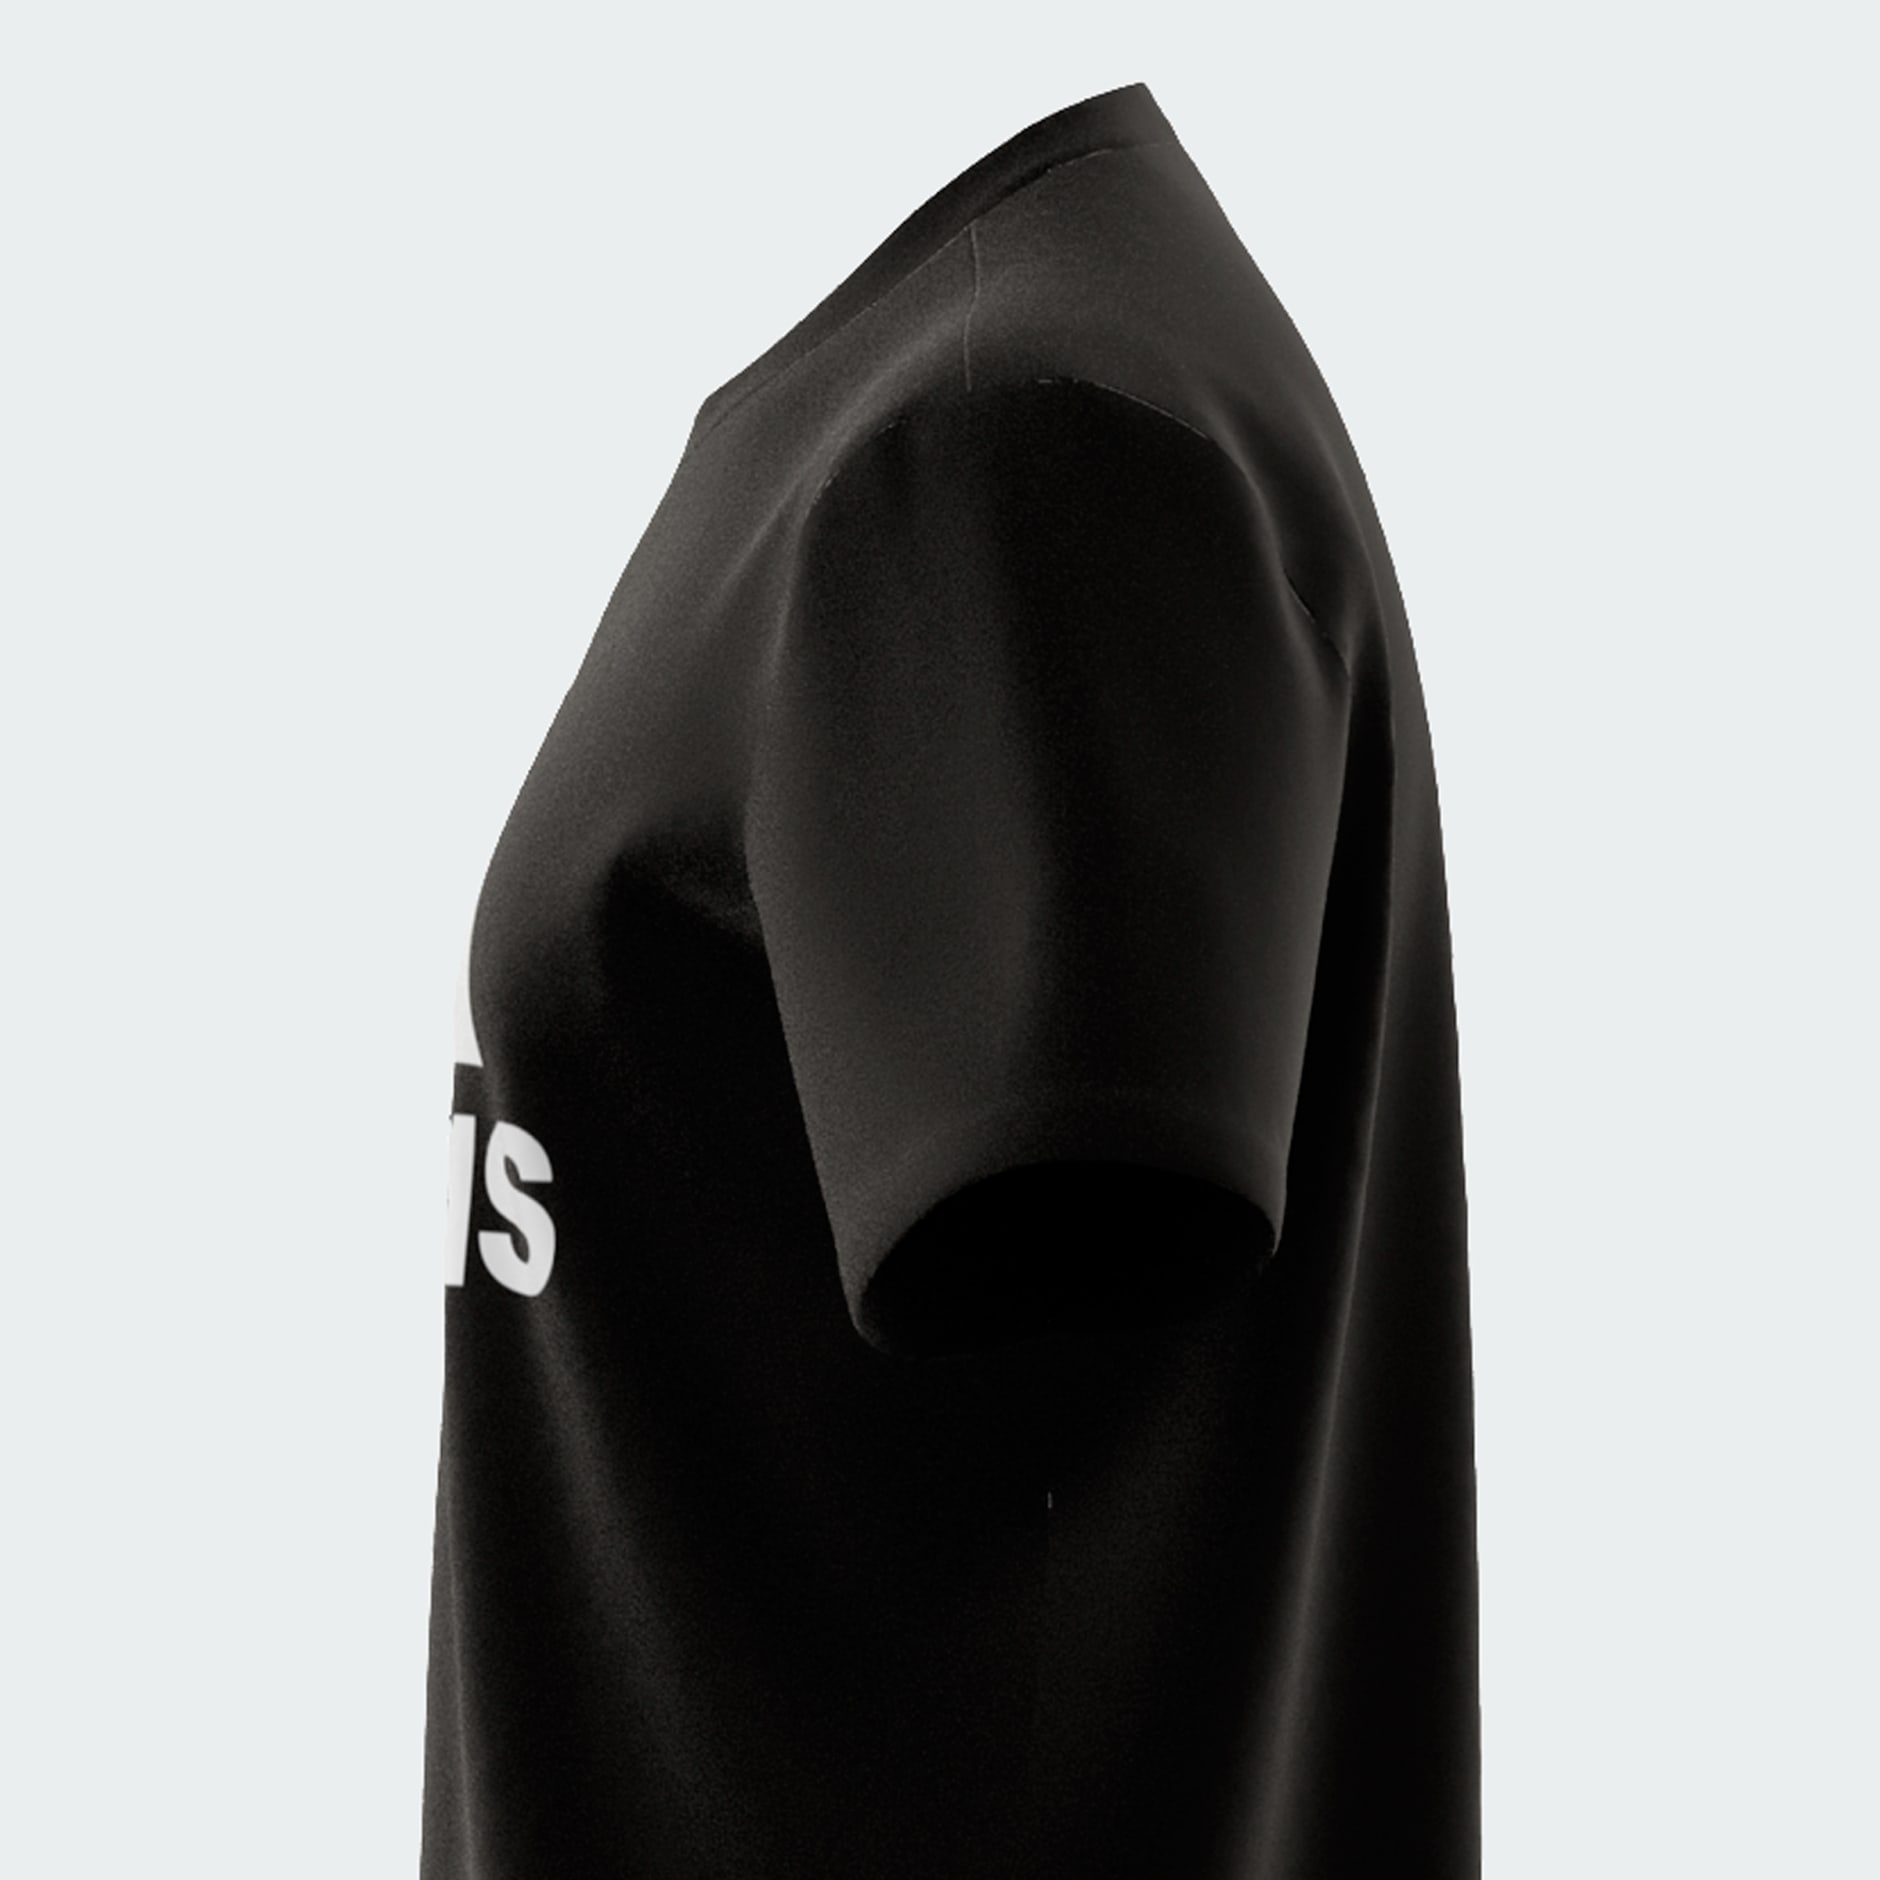 Clothing - ESSENTIALS SINGLE JERSEY BIG LOGO T-SHIRT - Black | adidas ...